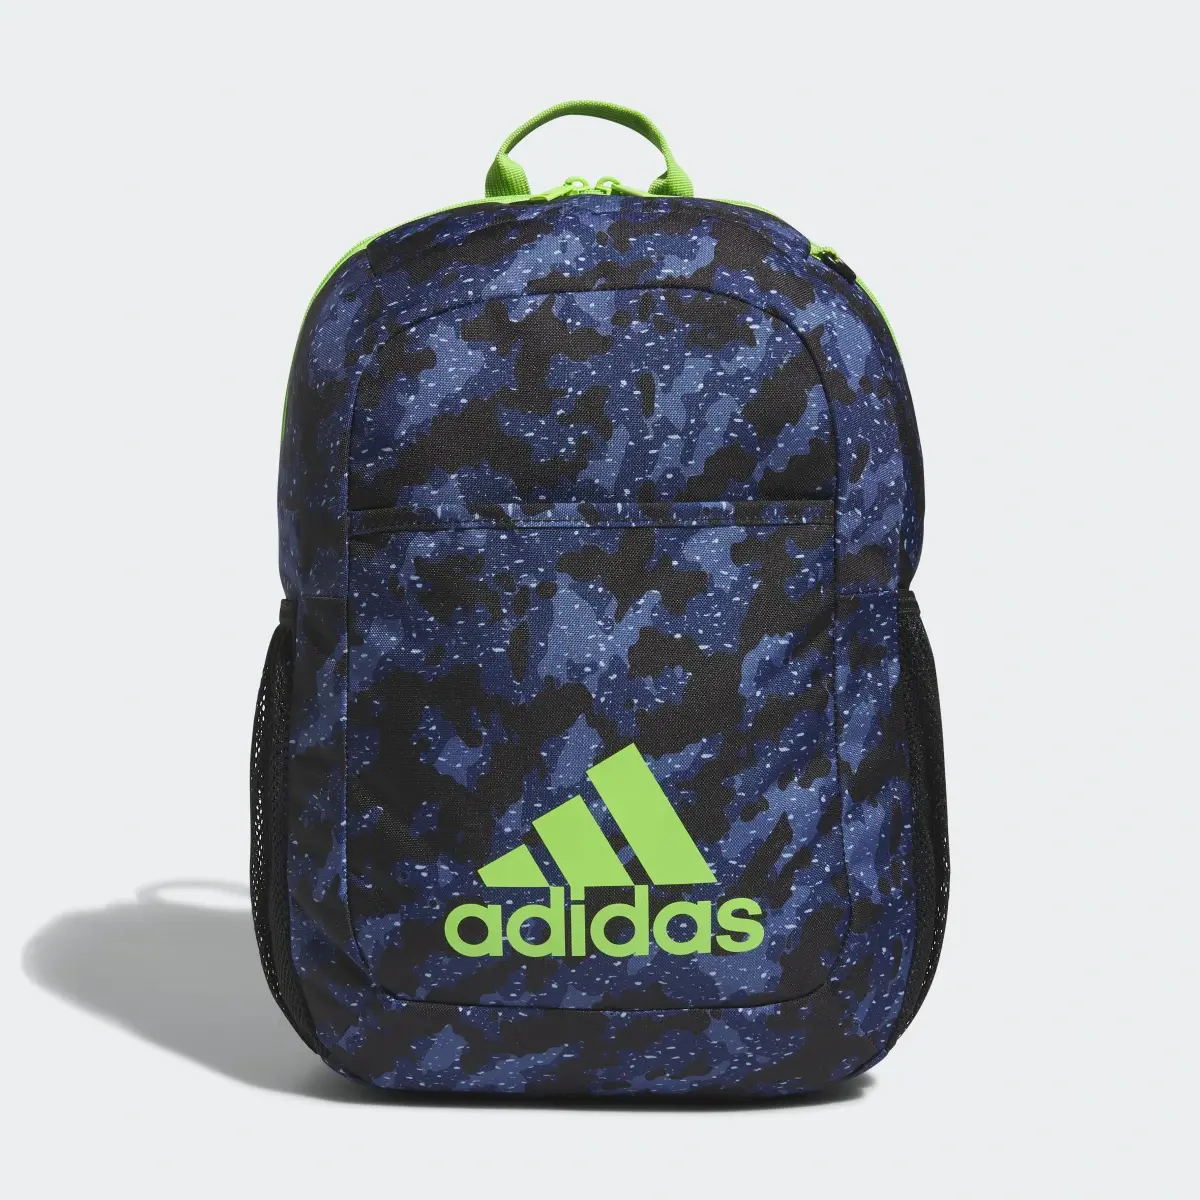 Adidas Ready Backpack. 2